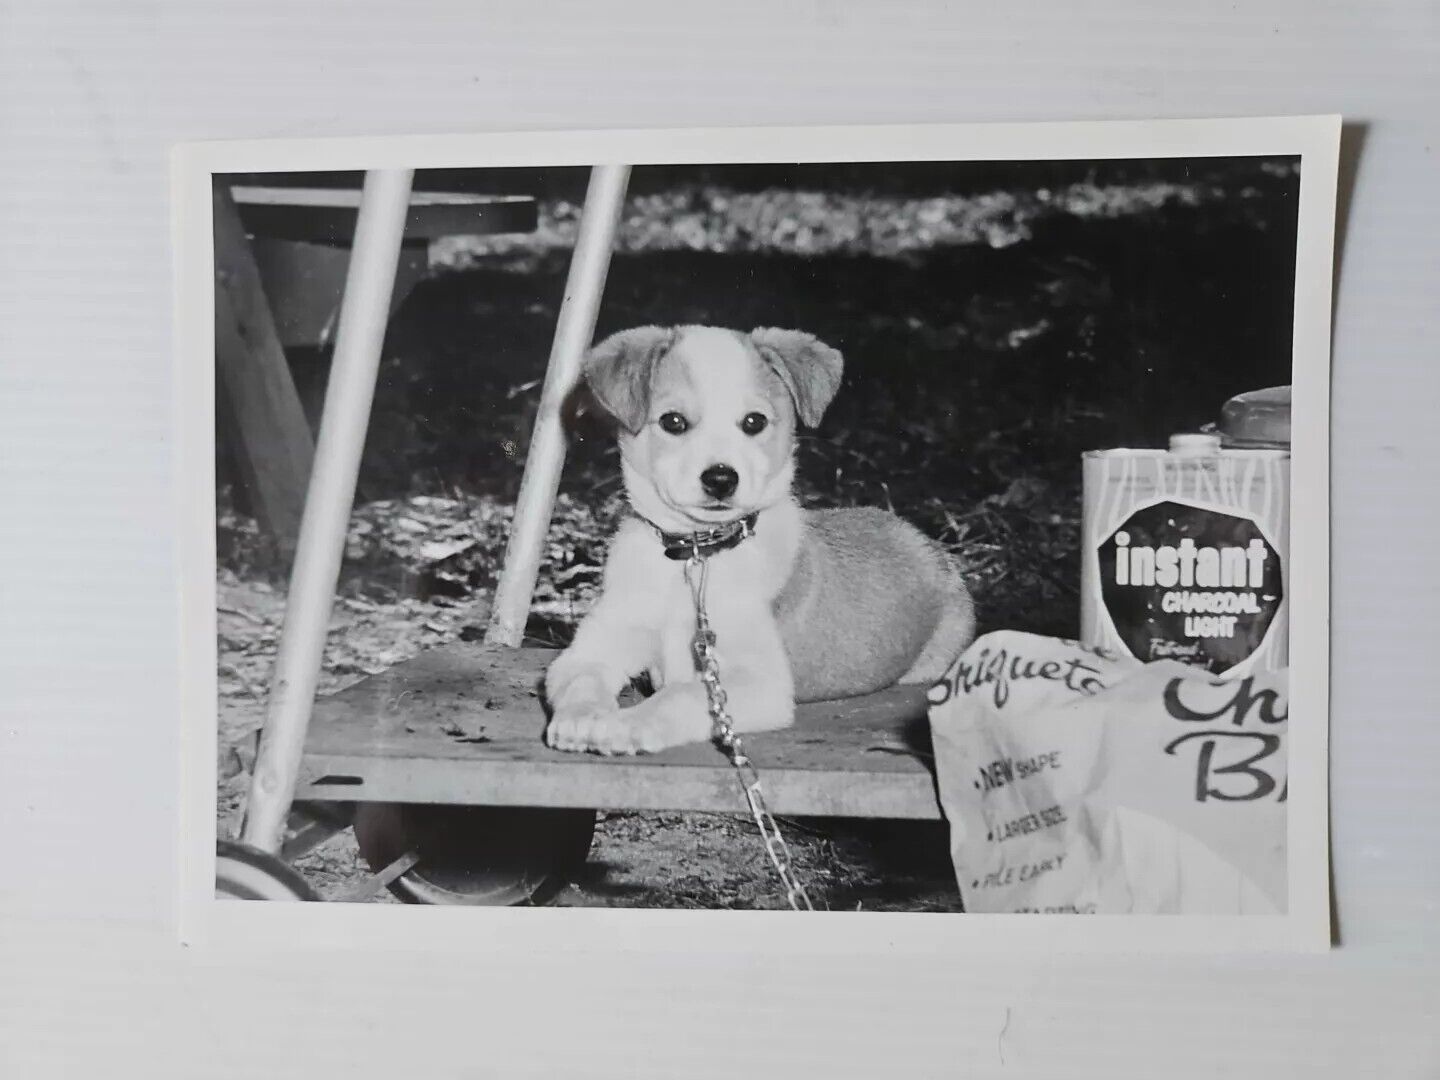 Lot of 3 4x6 Vinage Photos Cute Dog New York Telephone Company Picnic